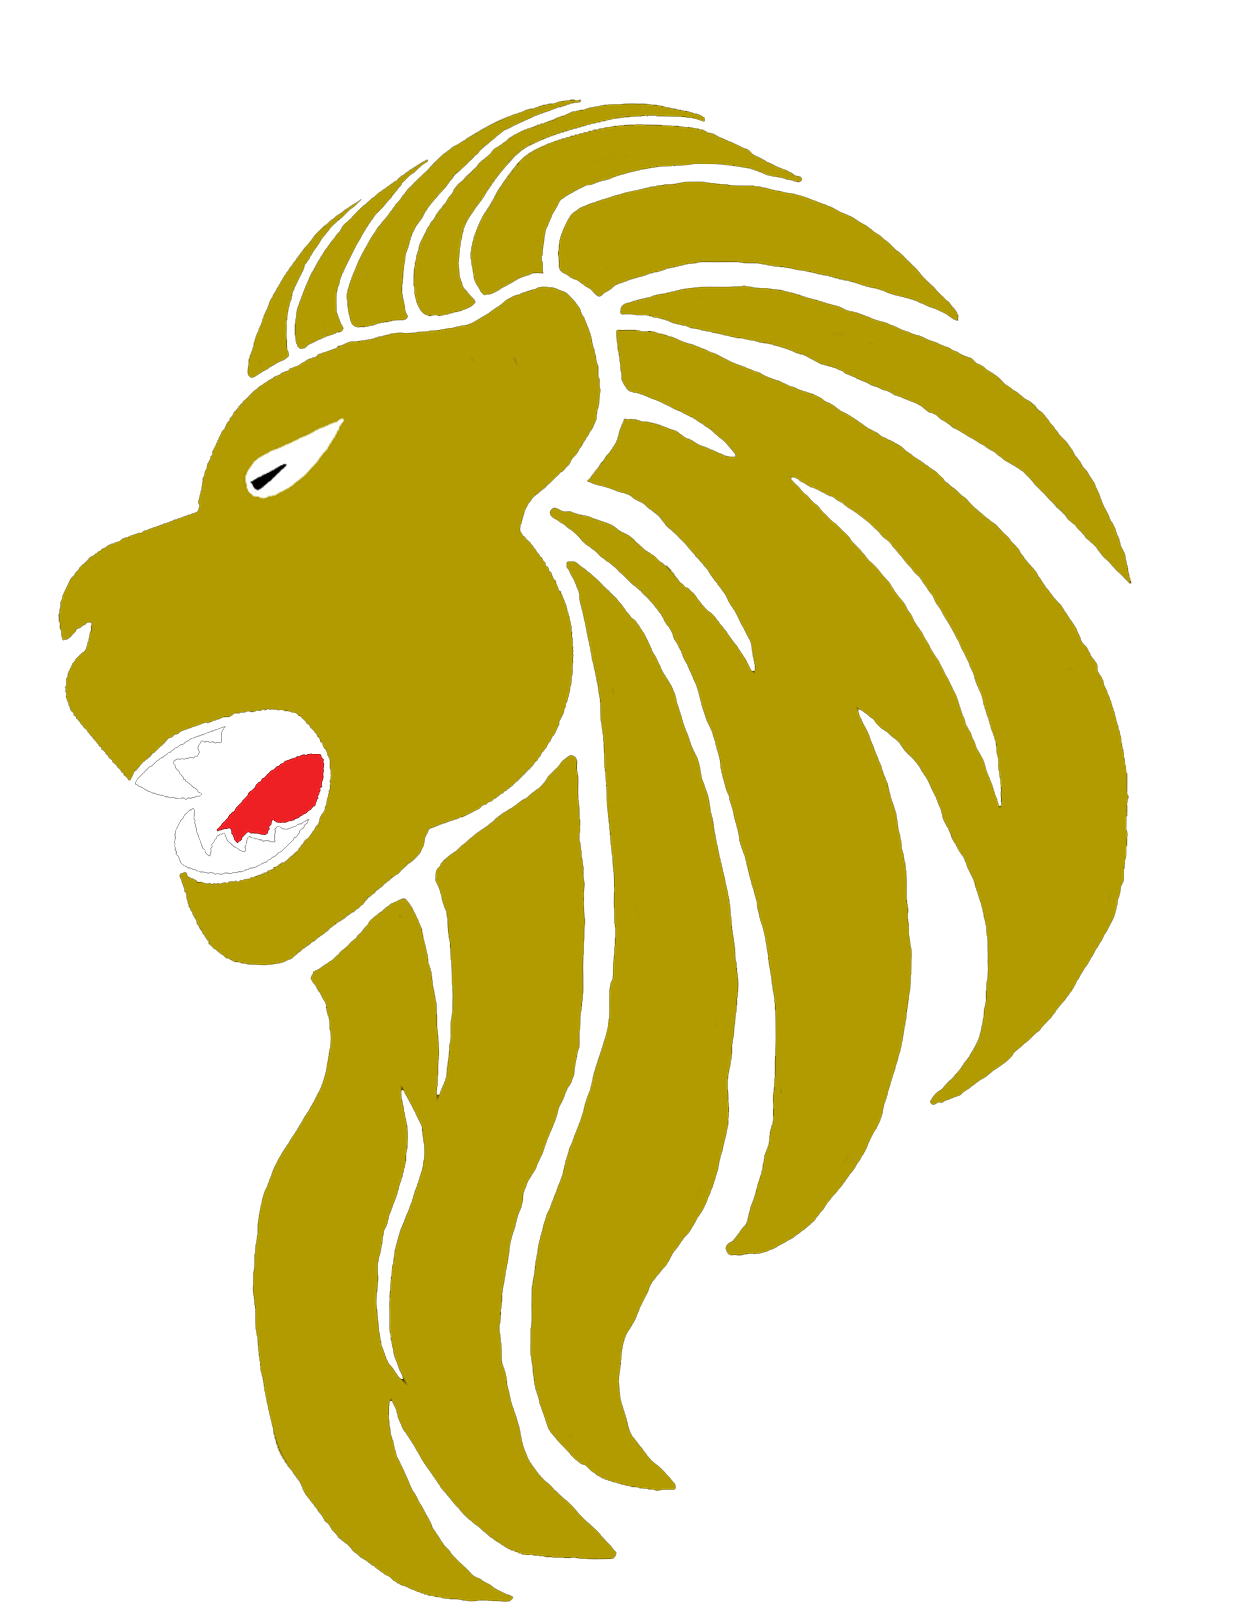 Awards the recon empire. Clipart lion golden lion